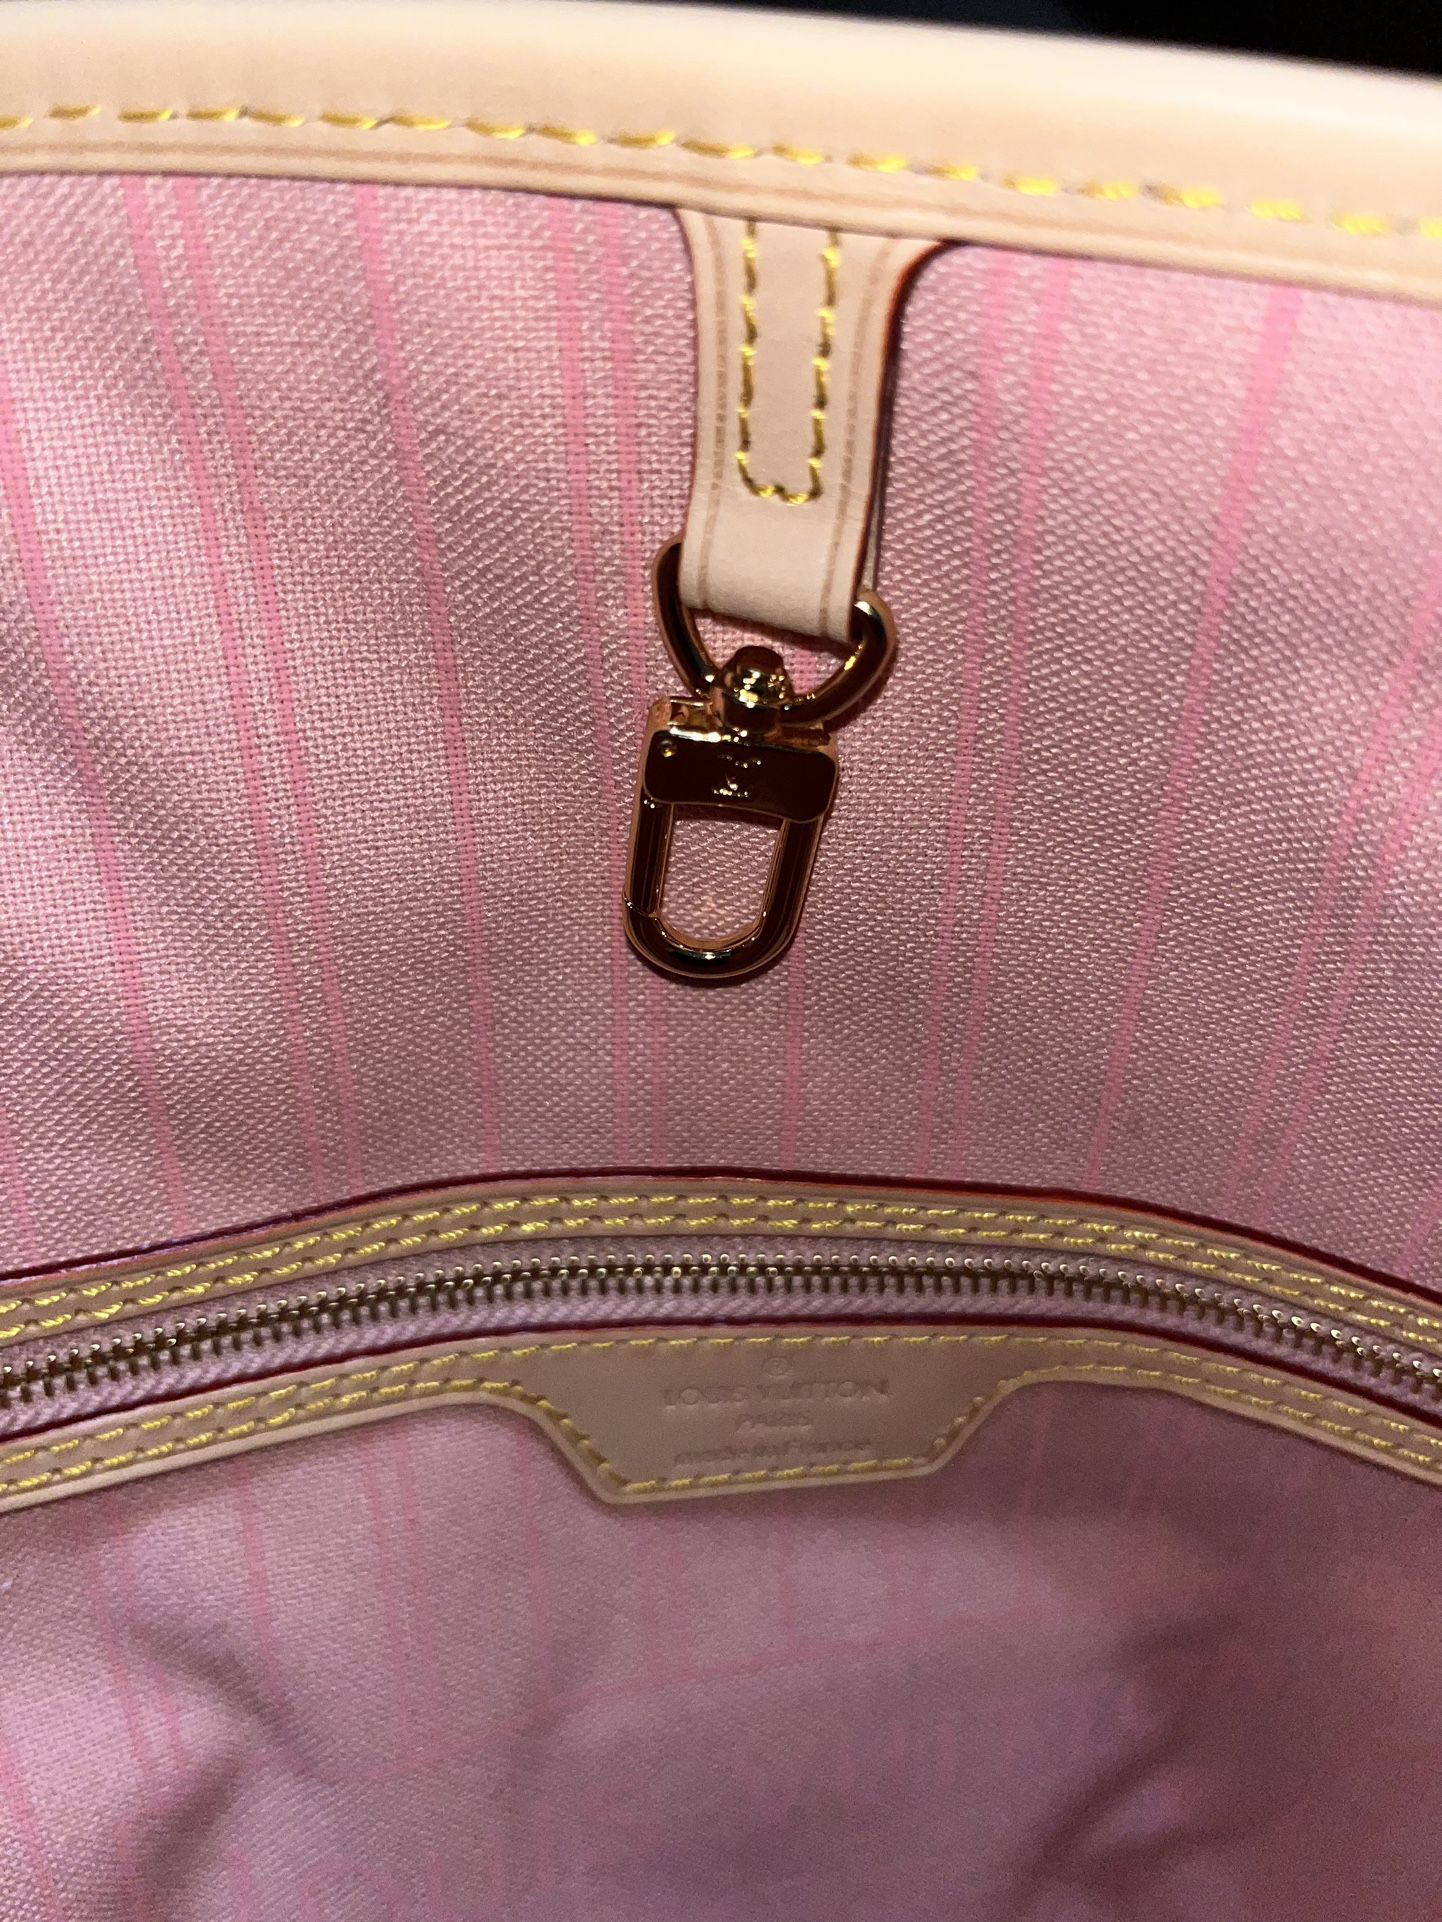 Louis Vuitton Damier azur neverfull, neverfull mm, rose Ballerine neverfull,  Burberry scarf, pink Burberry…